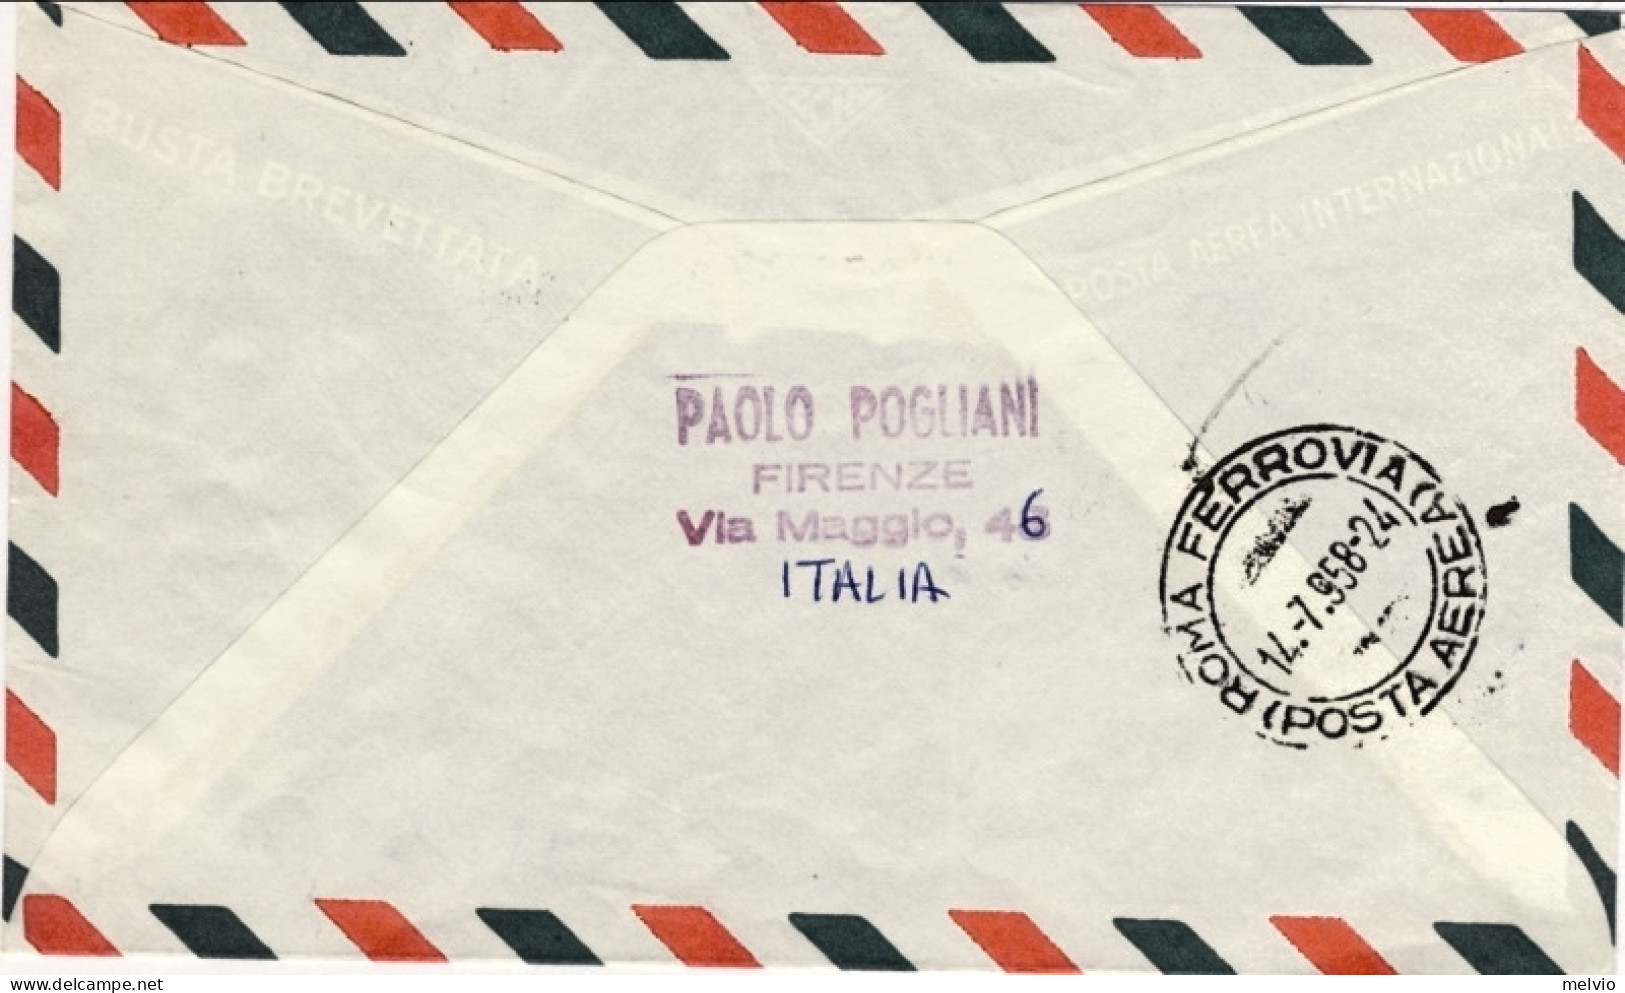 1958-Germania I^volo Lufthansa Francoforte Monaco Roma Del 14 Luglio - Briefe U. Dokumente